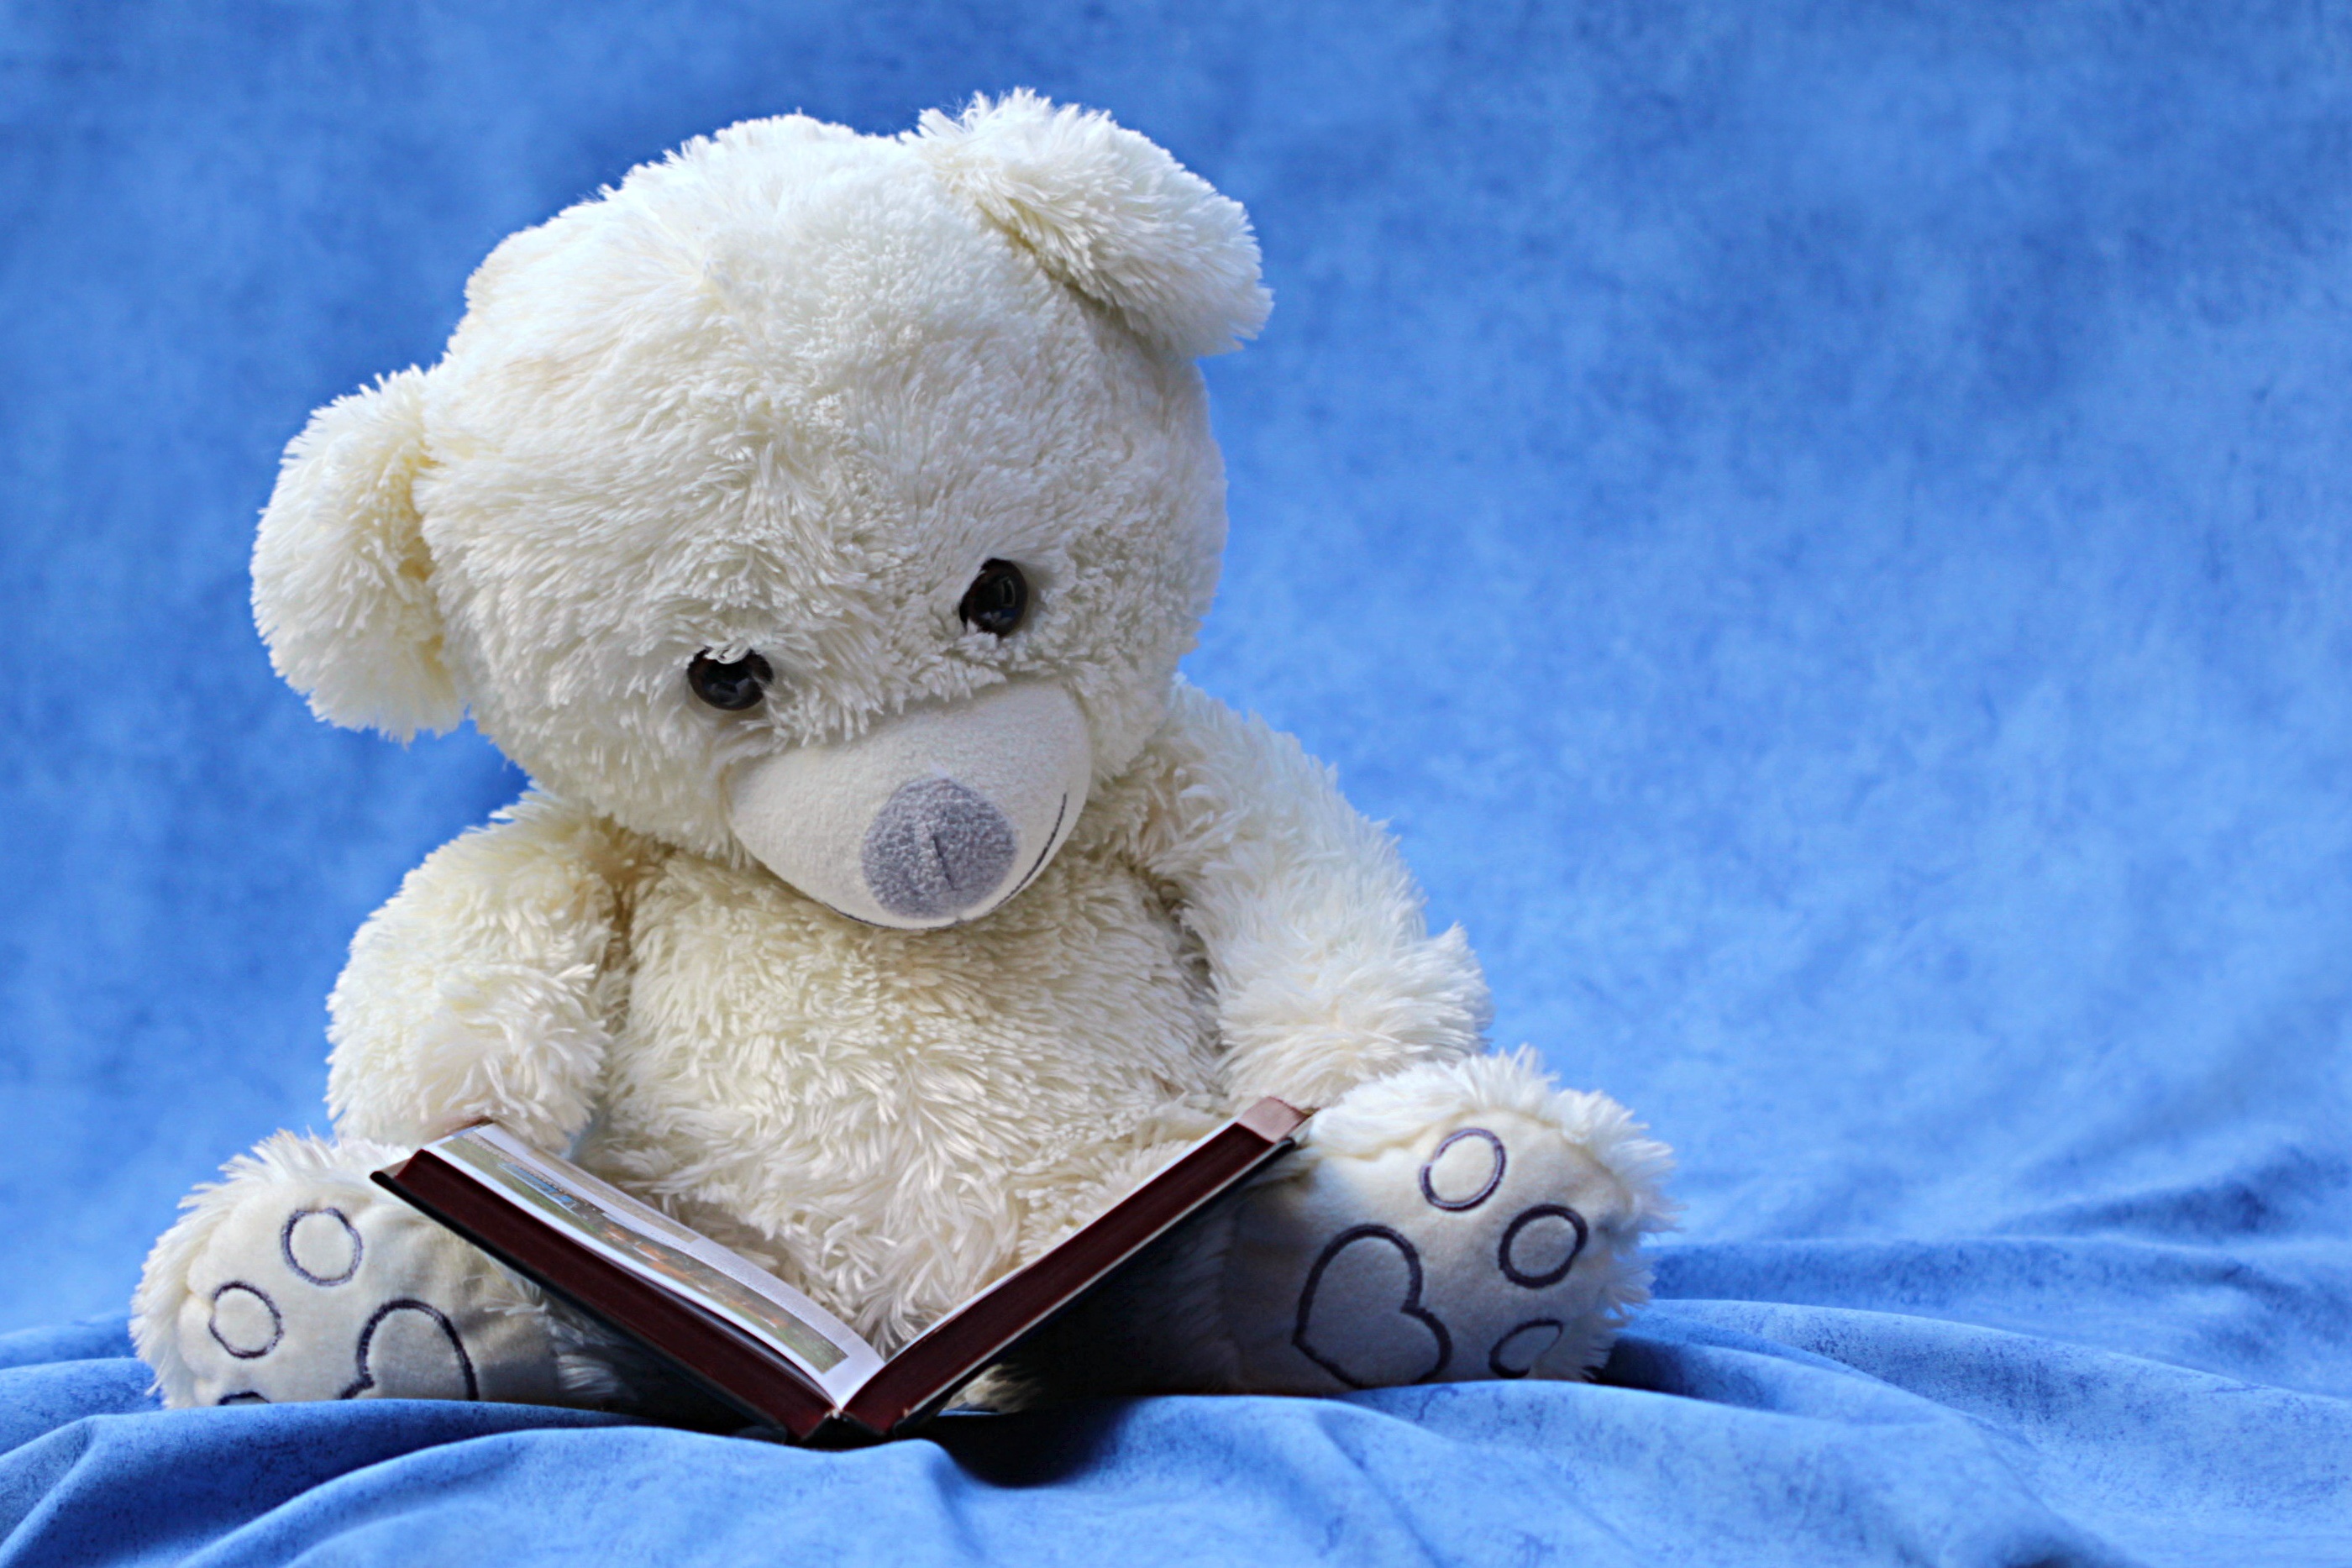 A white teddy bear reading a book